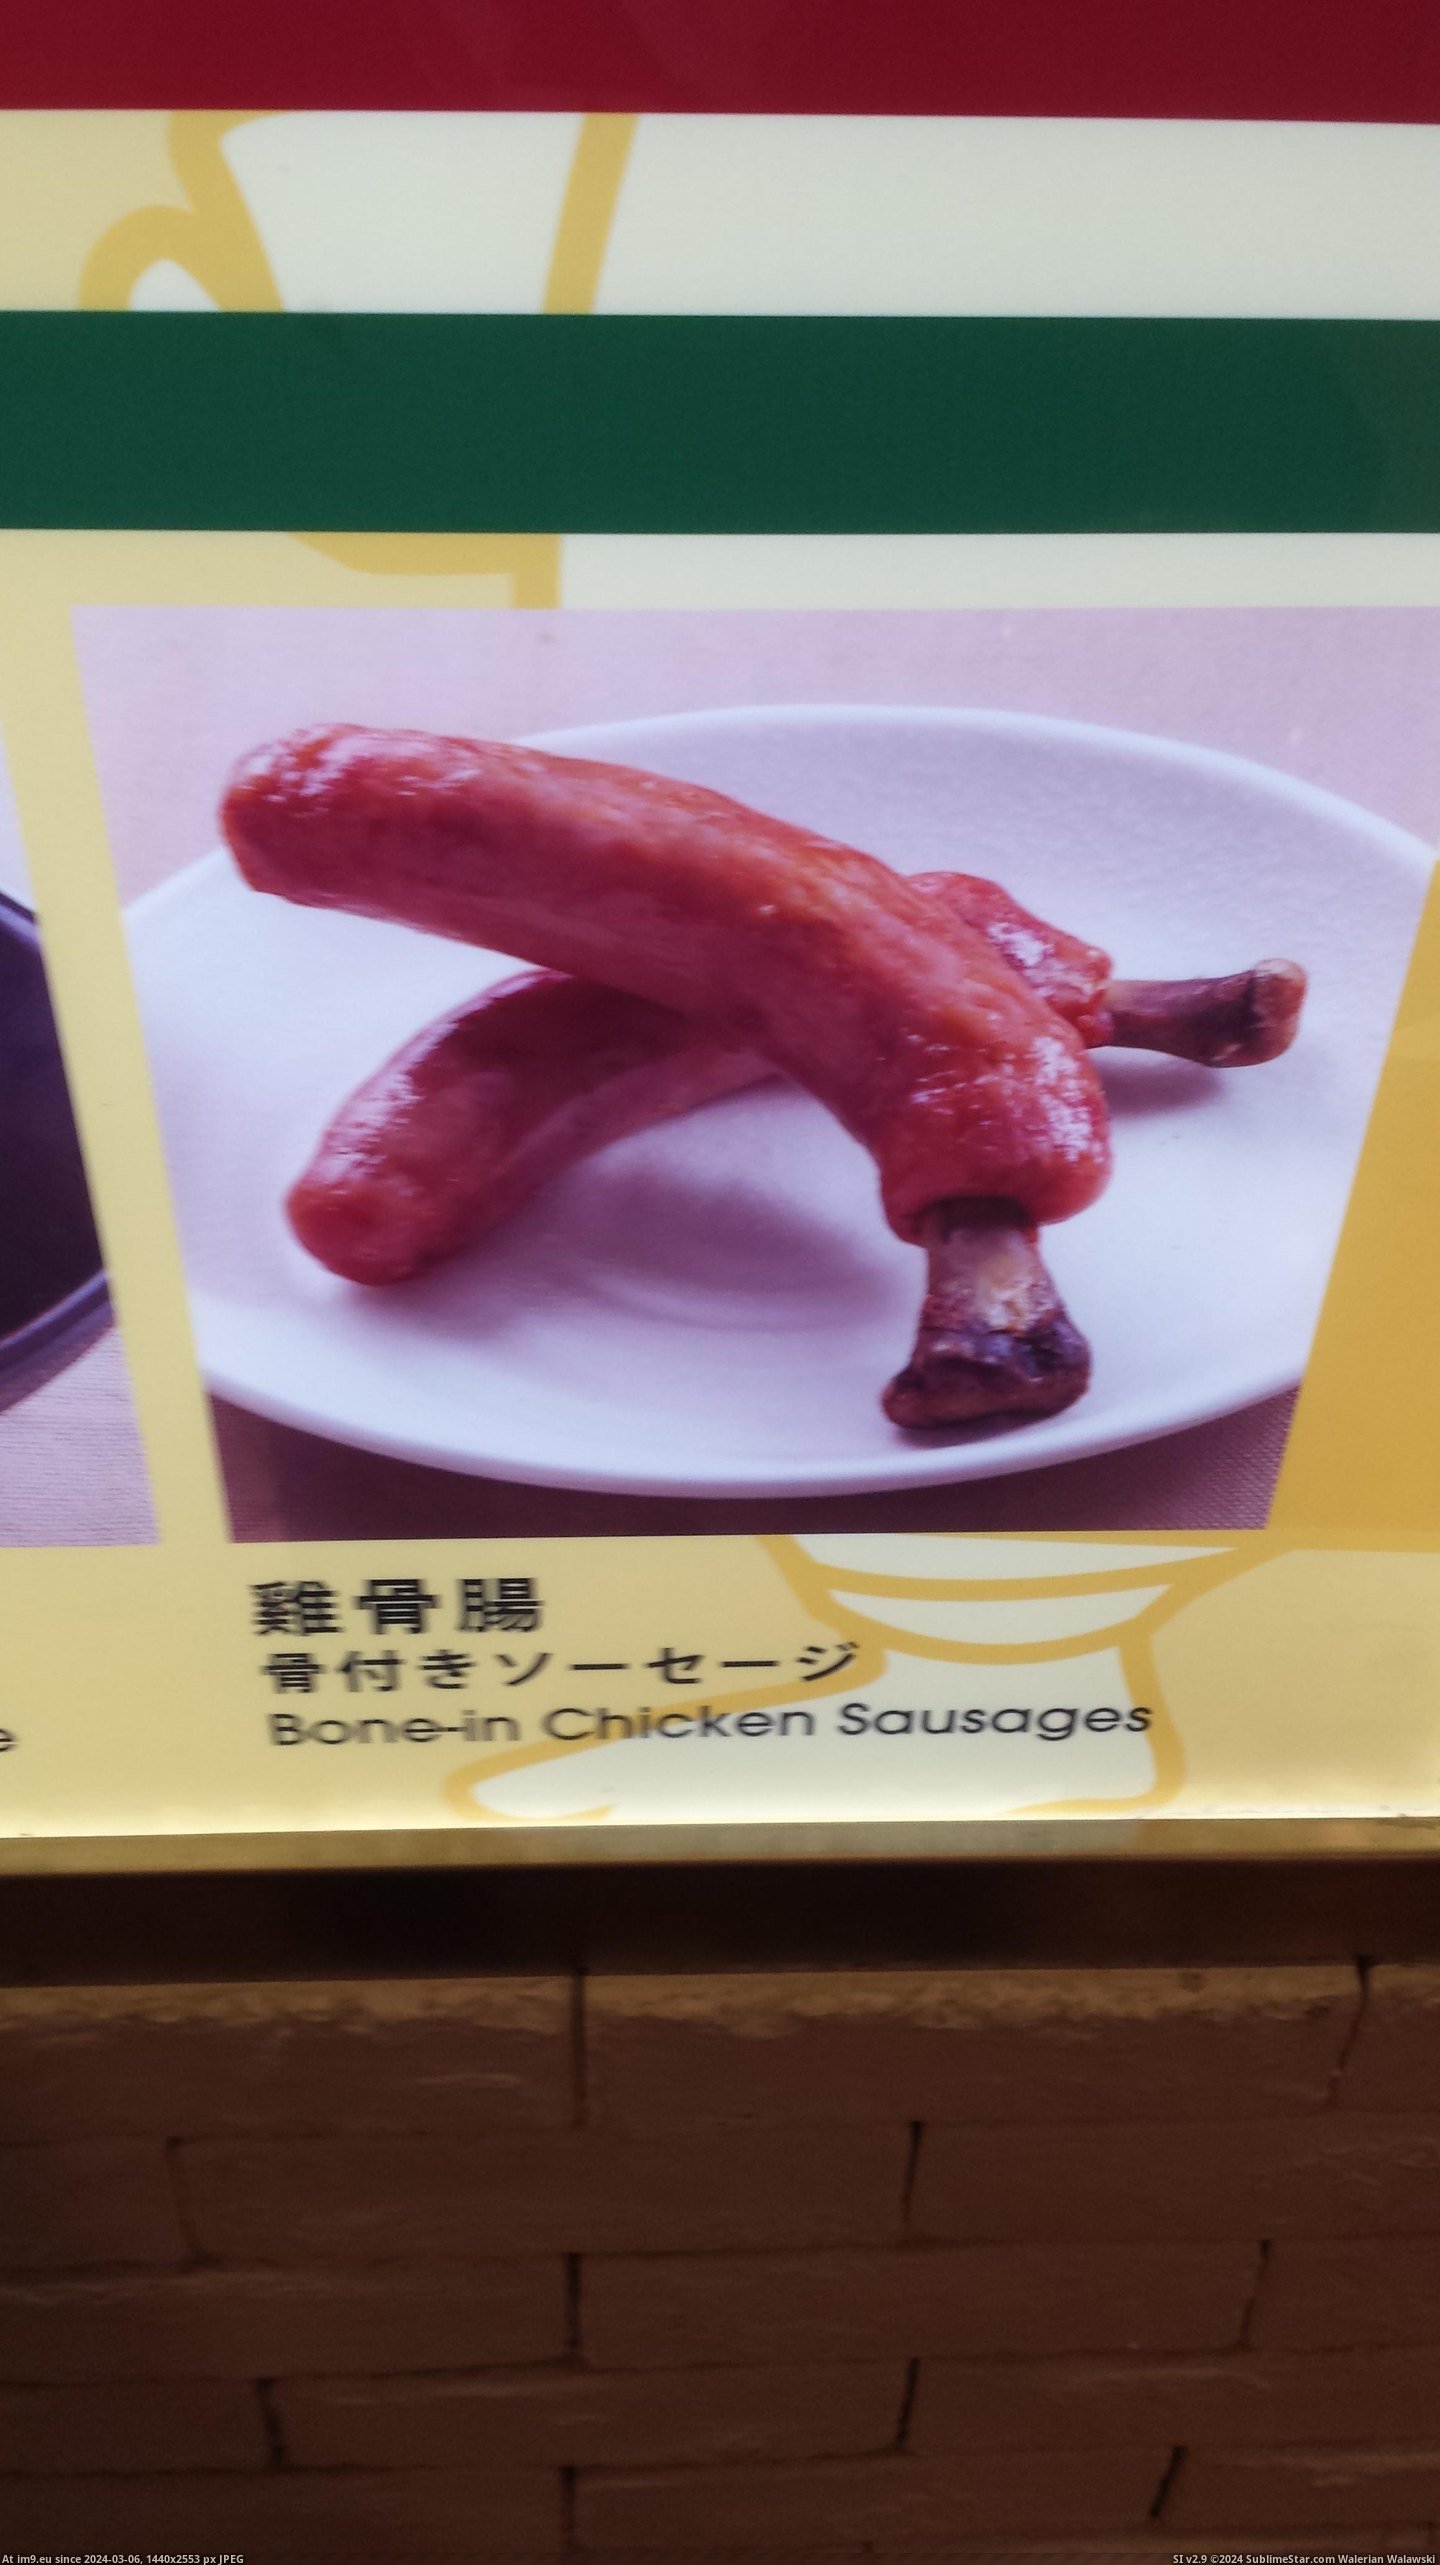 #Wtf #Bone #Sausages #Chicken [Wtf] 'Bone-in' chicken sausages Pic. (Image of album My r/WTF favs))